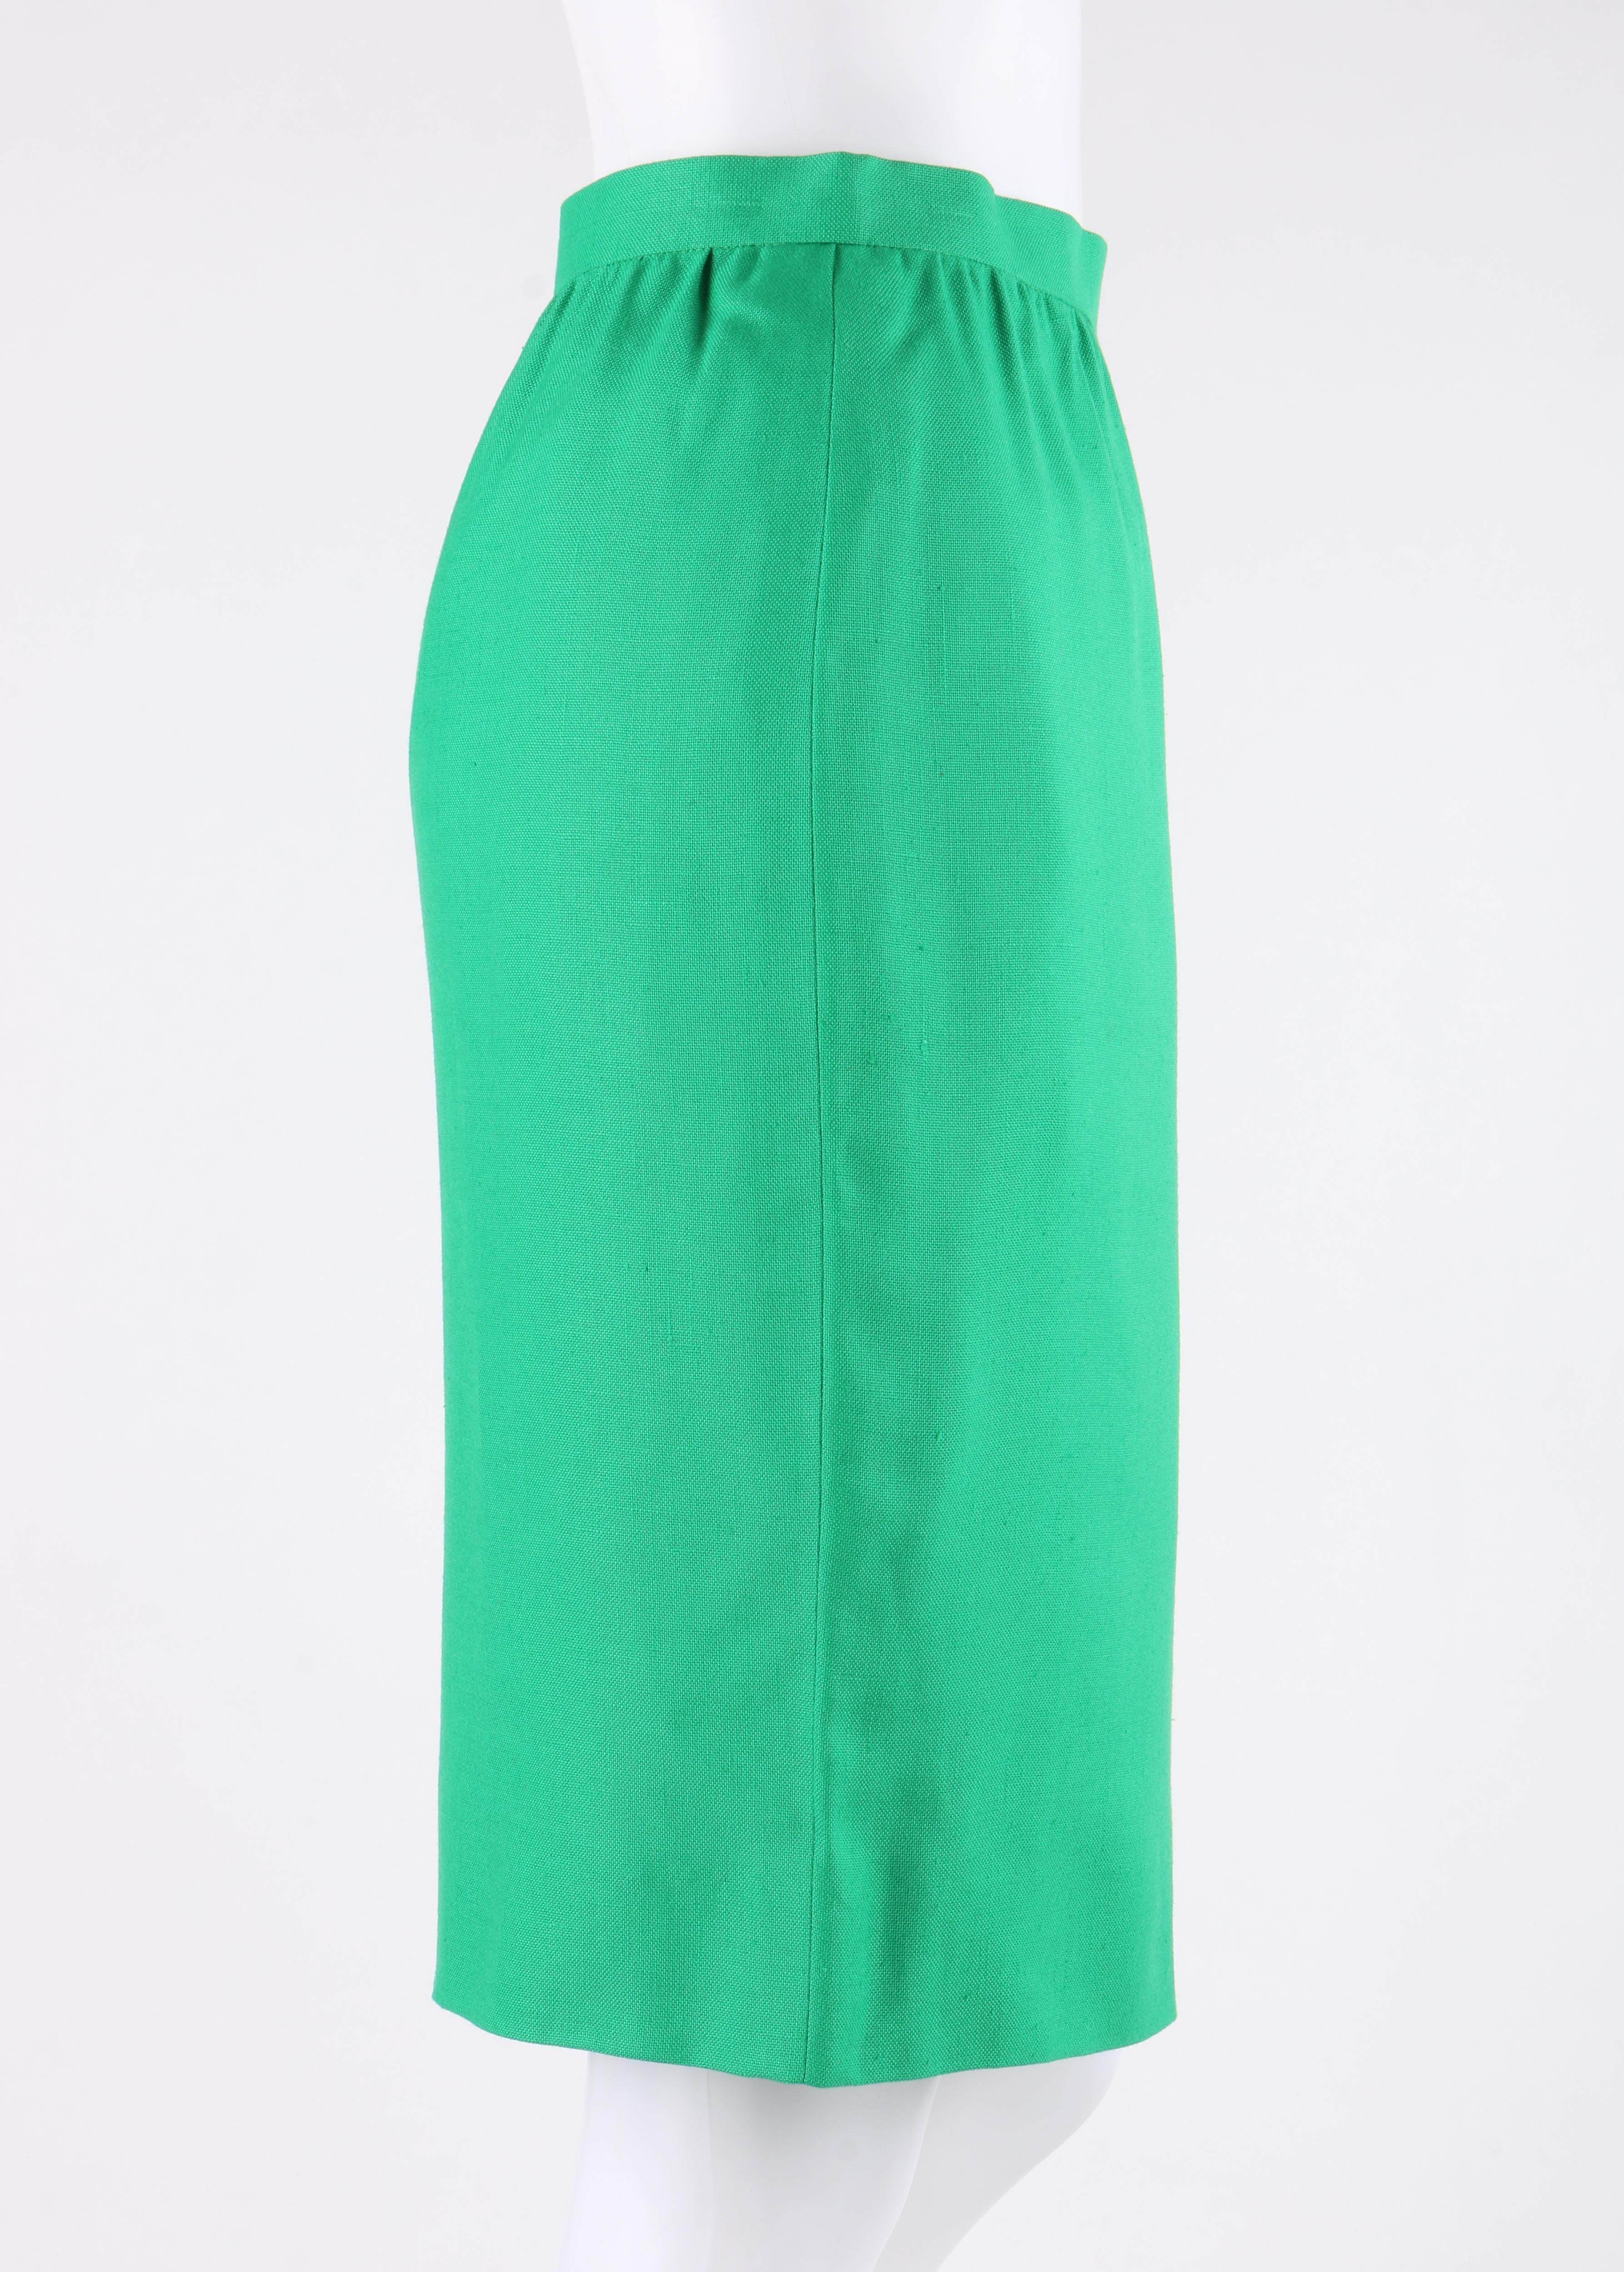 Women's GIVENCHY S/S 1998 ALEXANDER McQUEEN 2pc Green Asymmetric Panel Skirt Suit Set For Sale